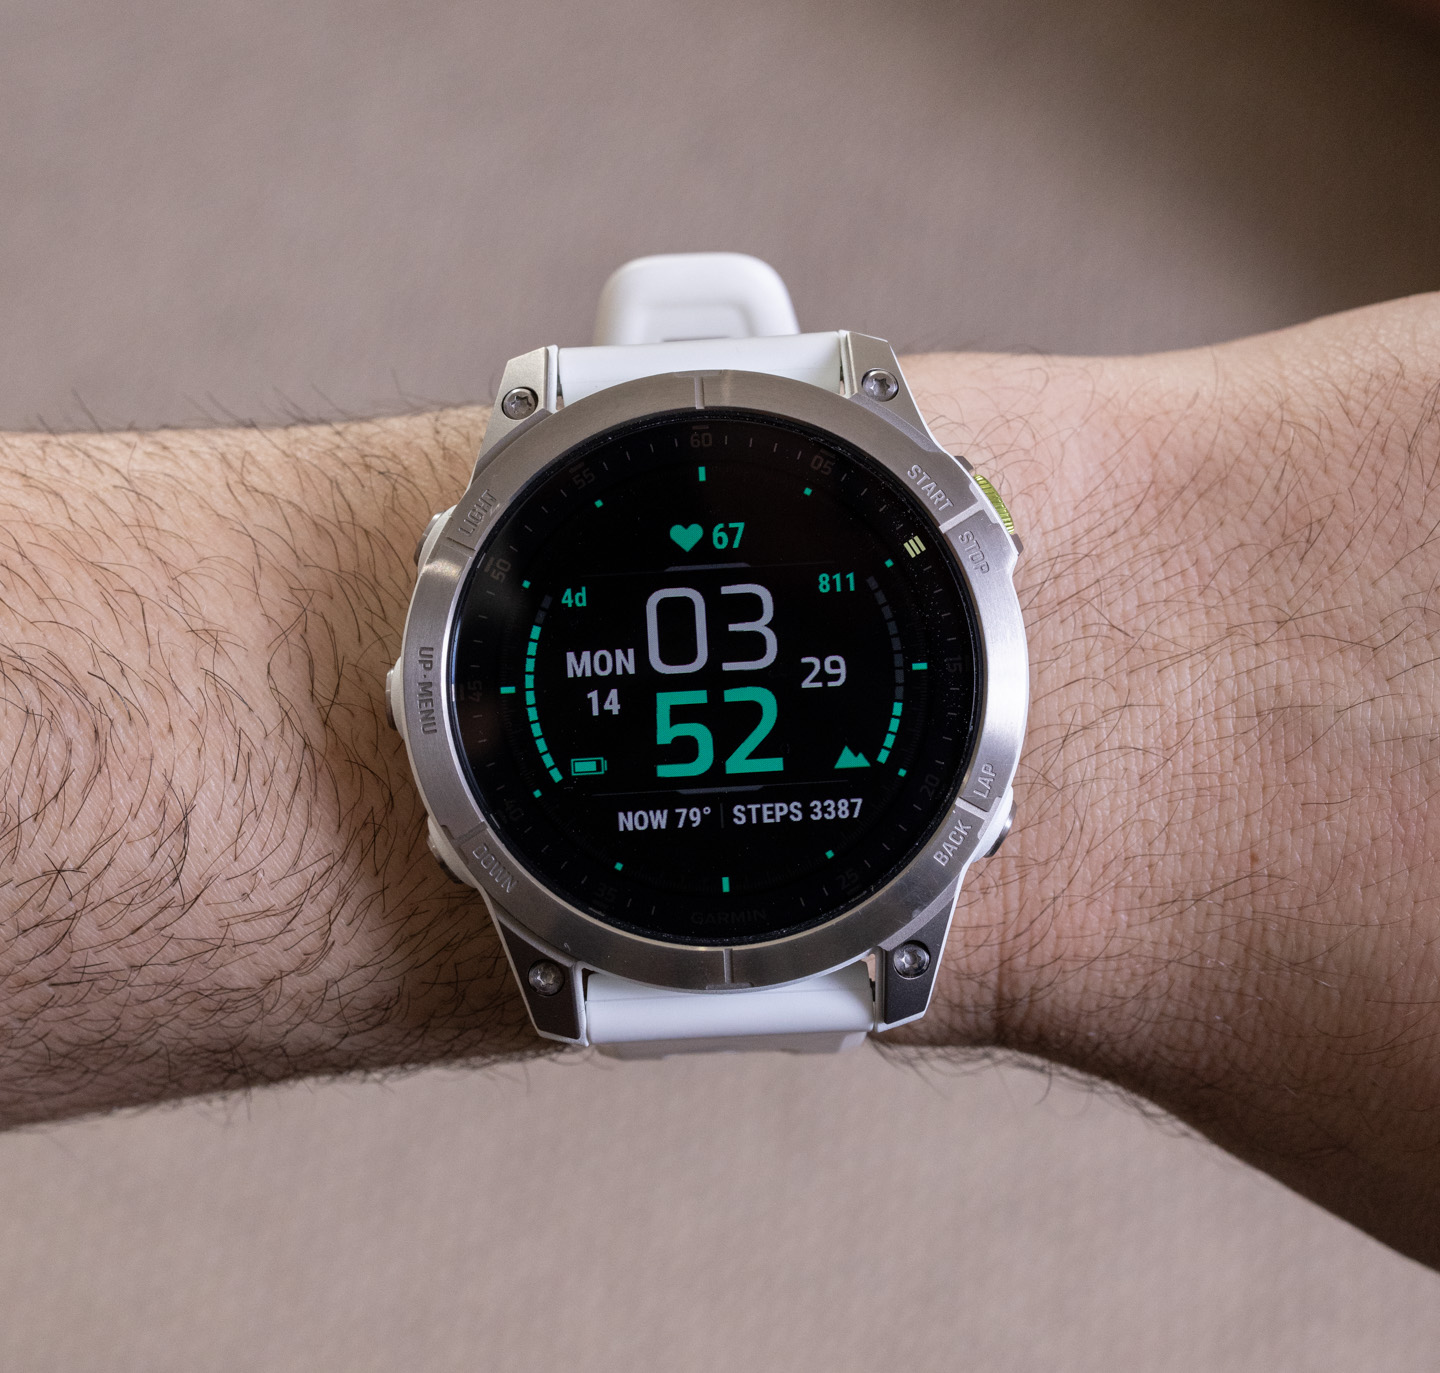 Garmin最新推出的高端智能手表-第2代armin Epix